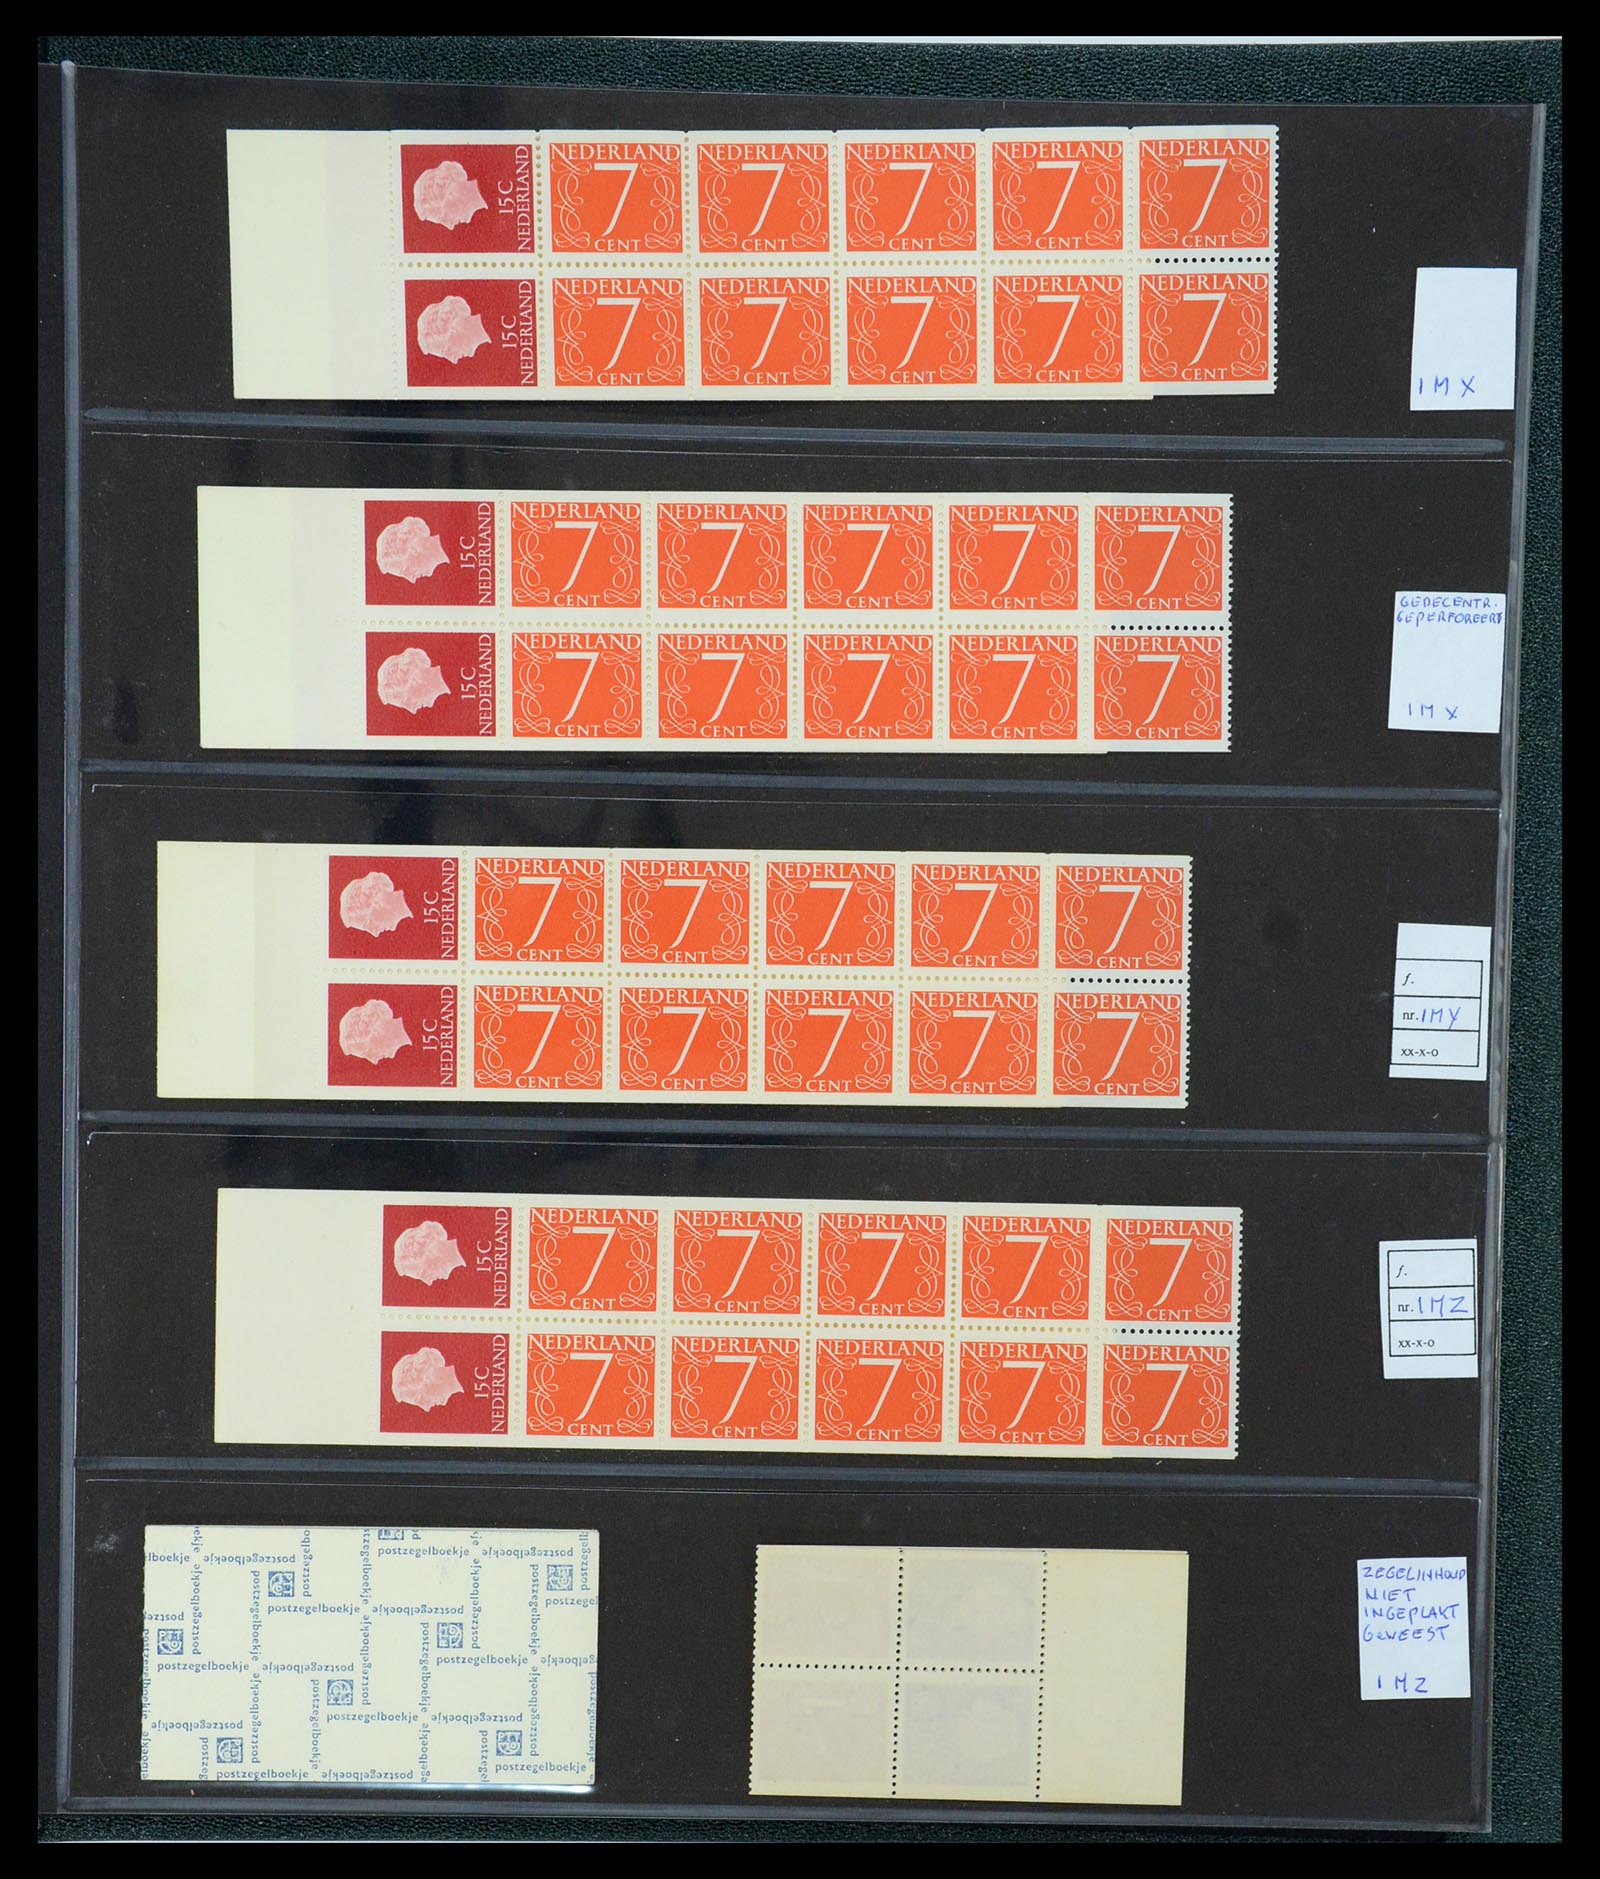 35705 010 - Stamp Collection 35705 Netherlands stamp booklets 1964-2000.